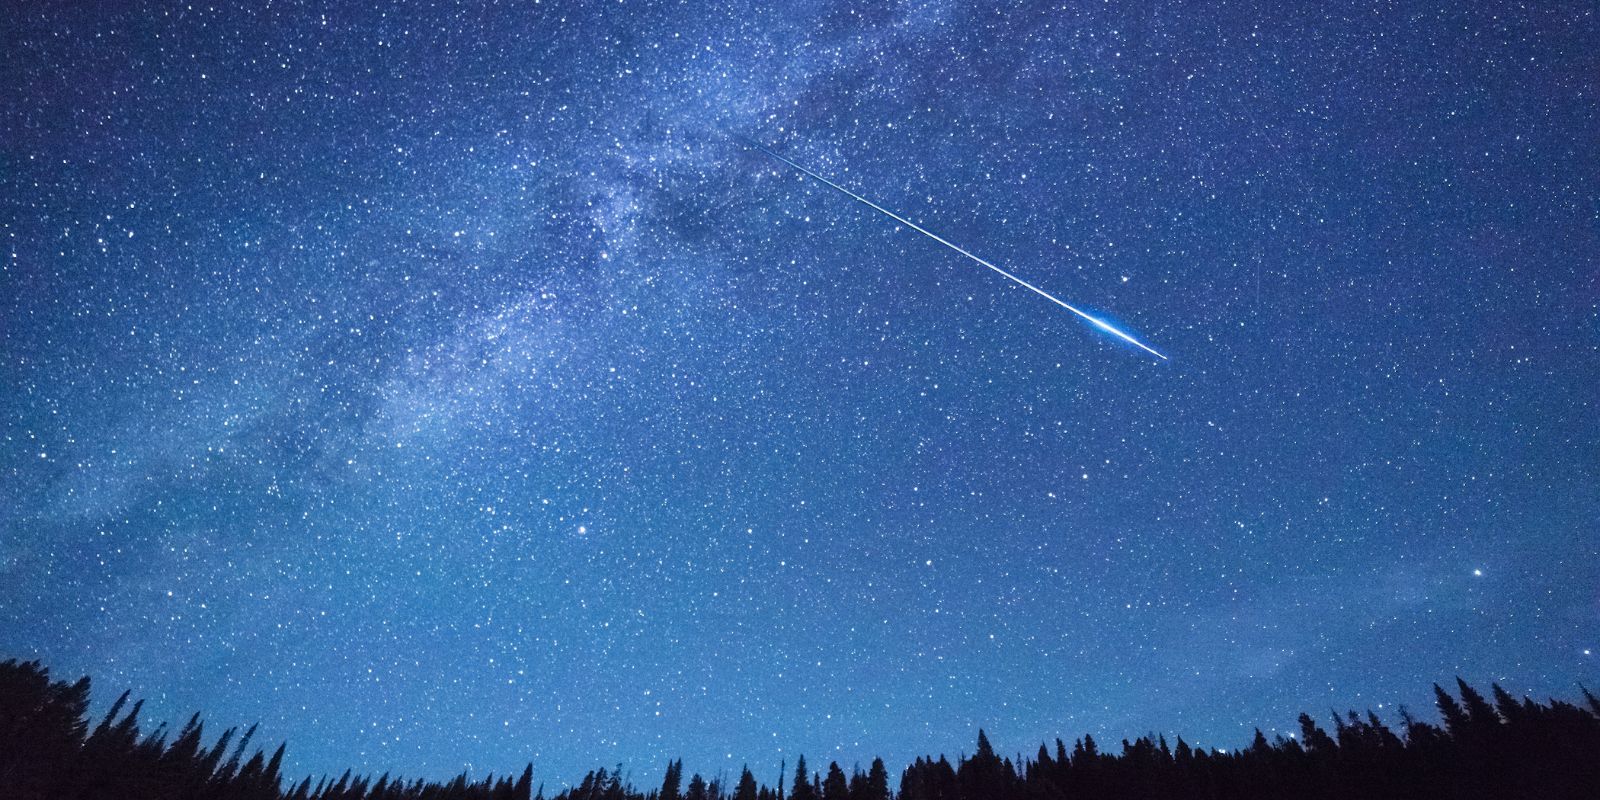 November 7th: Extraterrestrial Meteorite Struck Alsace, France